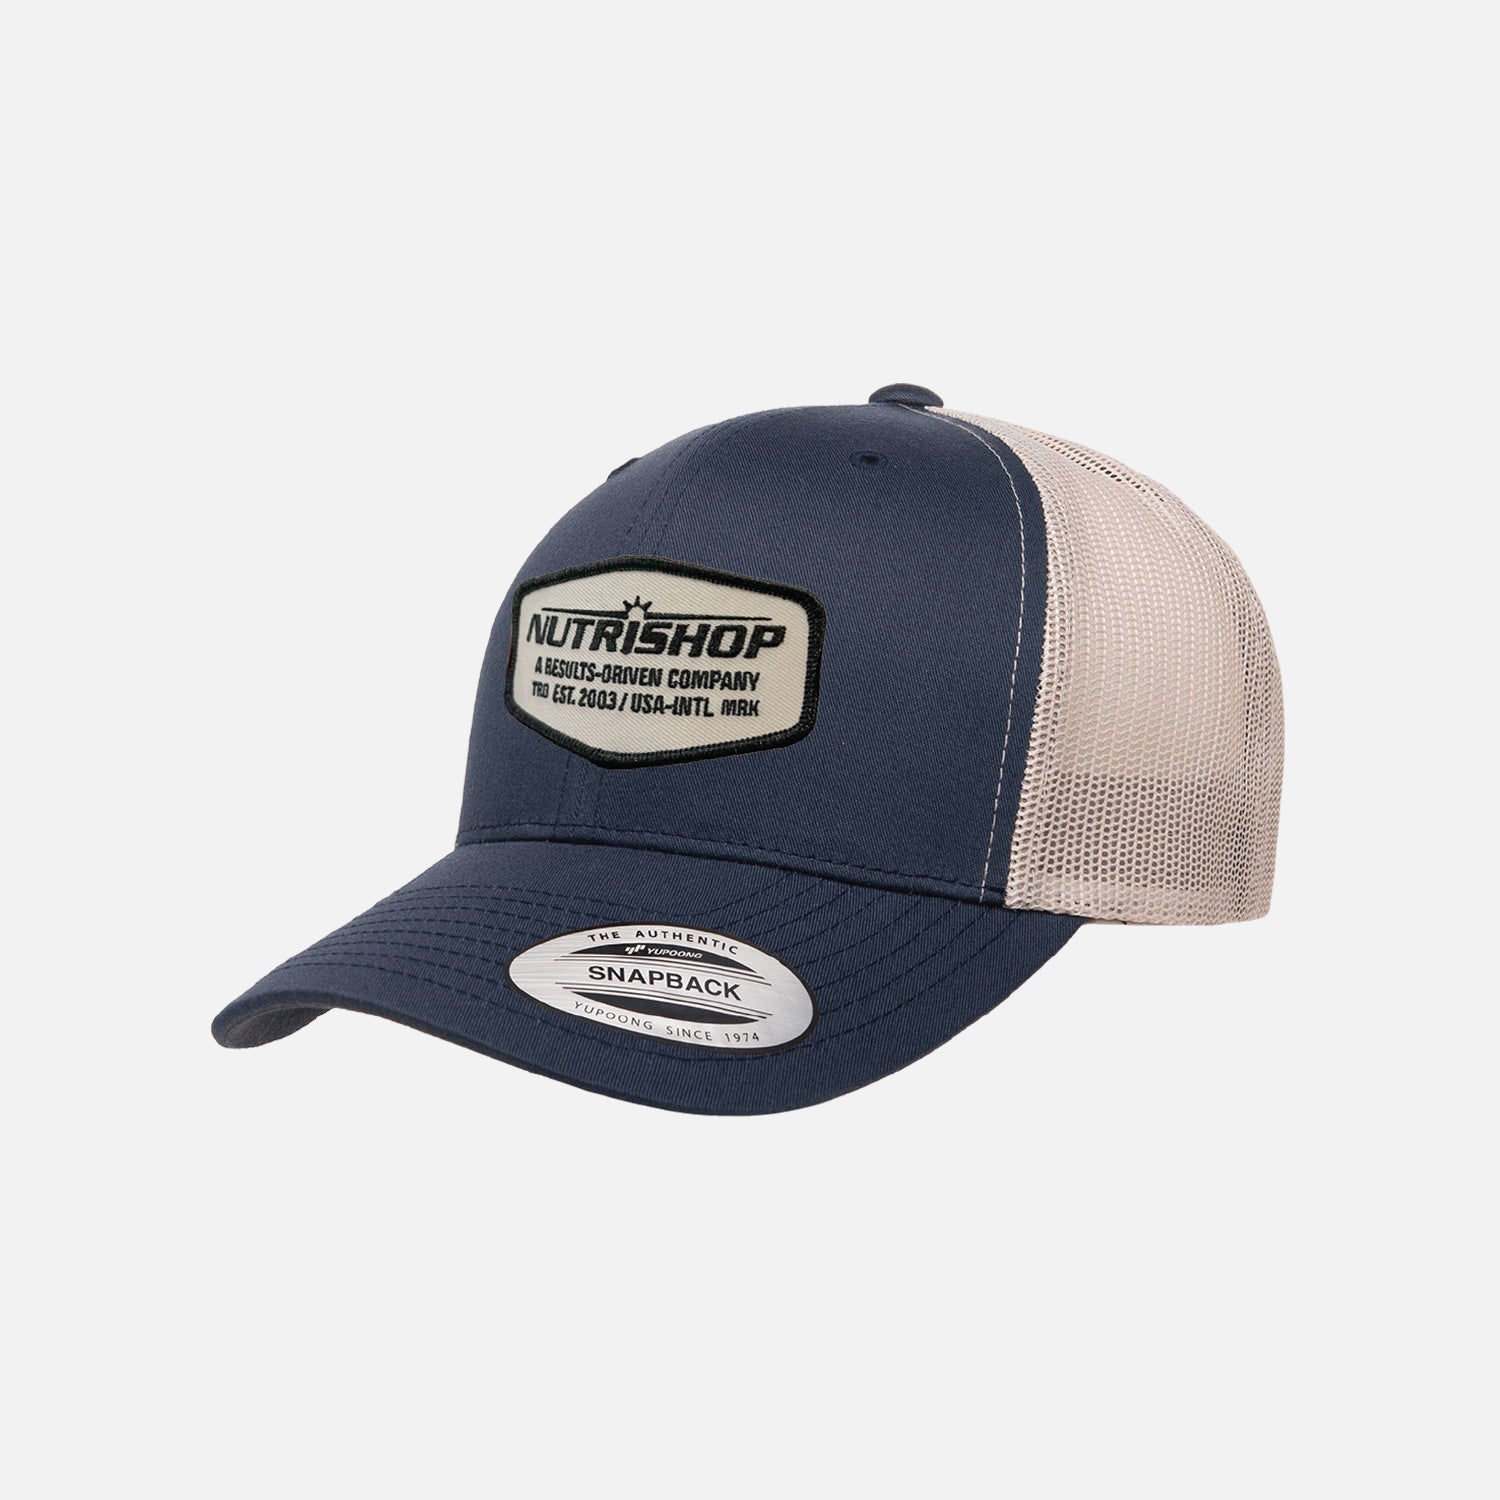 Retro Shop Trucker Hat